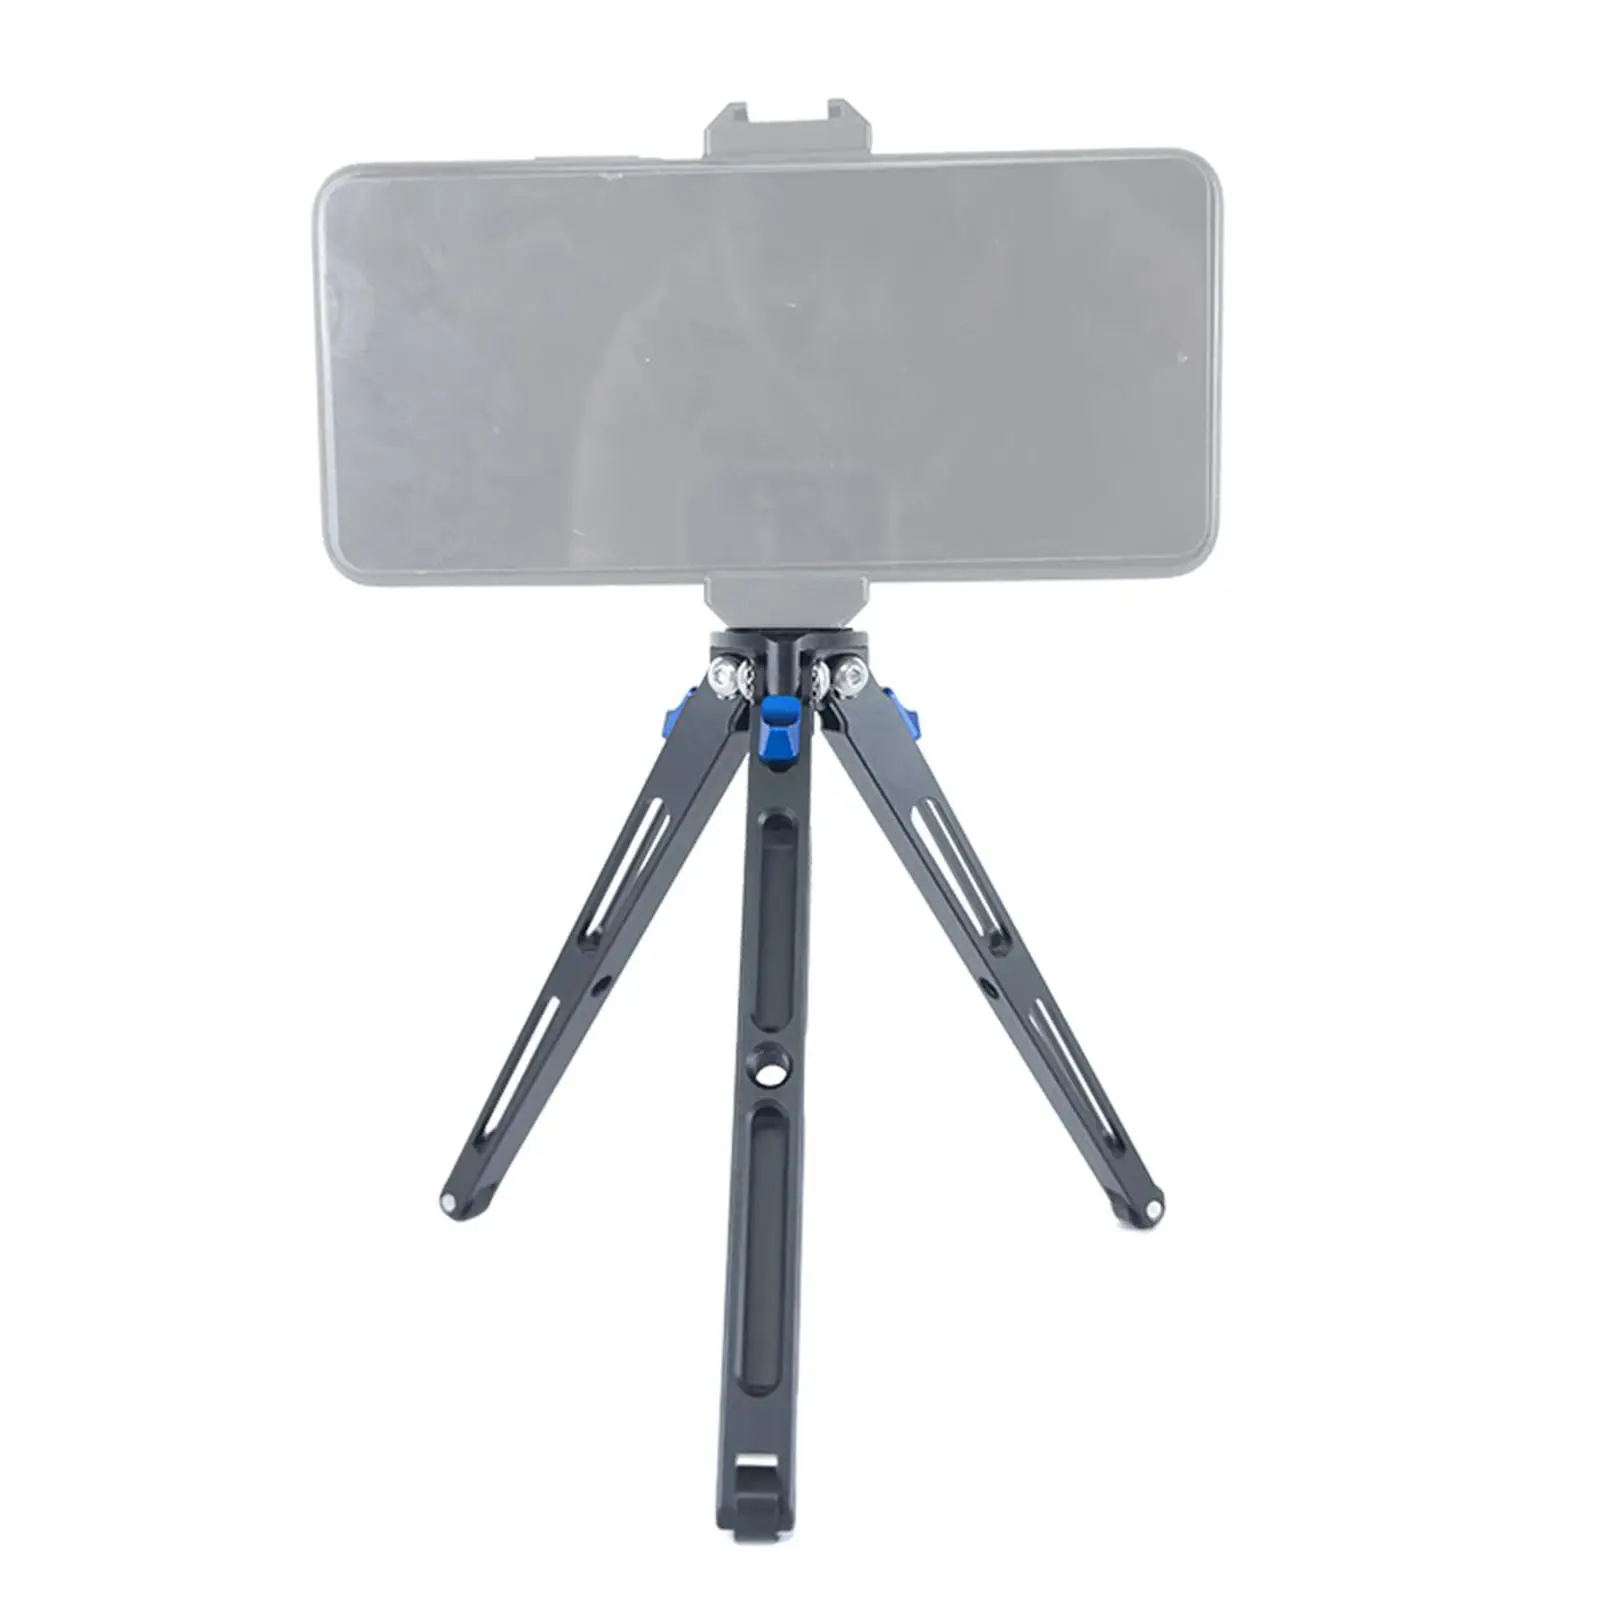 Mini Camera Tripod Portable Flexible Phone Tripod Stand for DSLR Camera Vlogging Photography Video Recording Smartphone